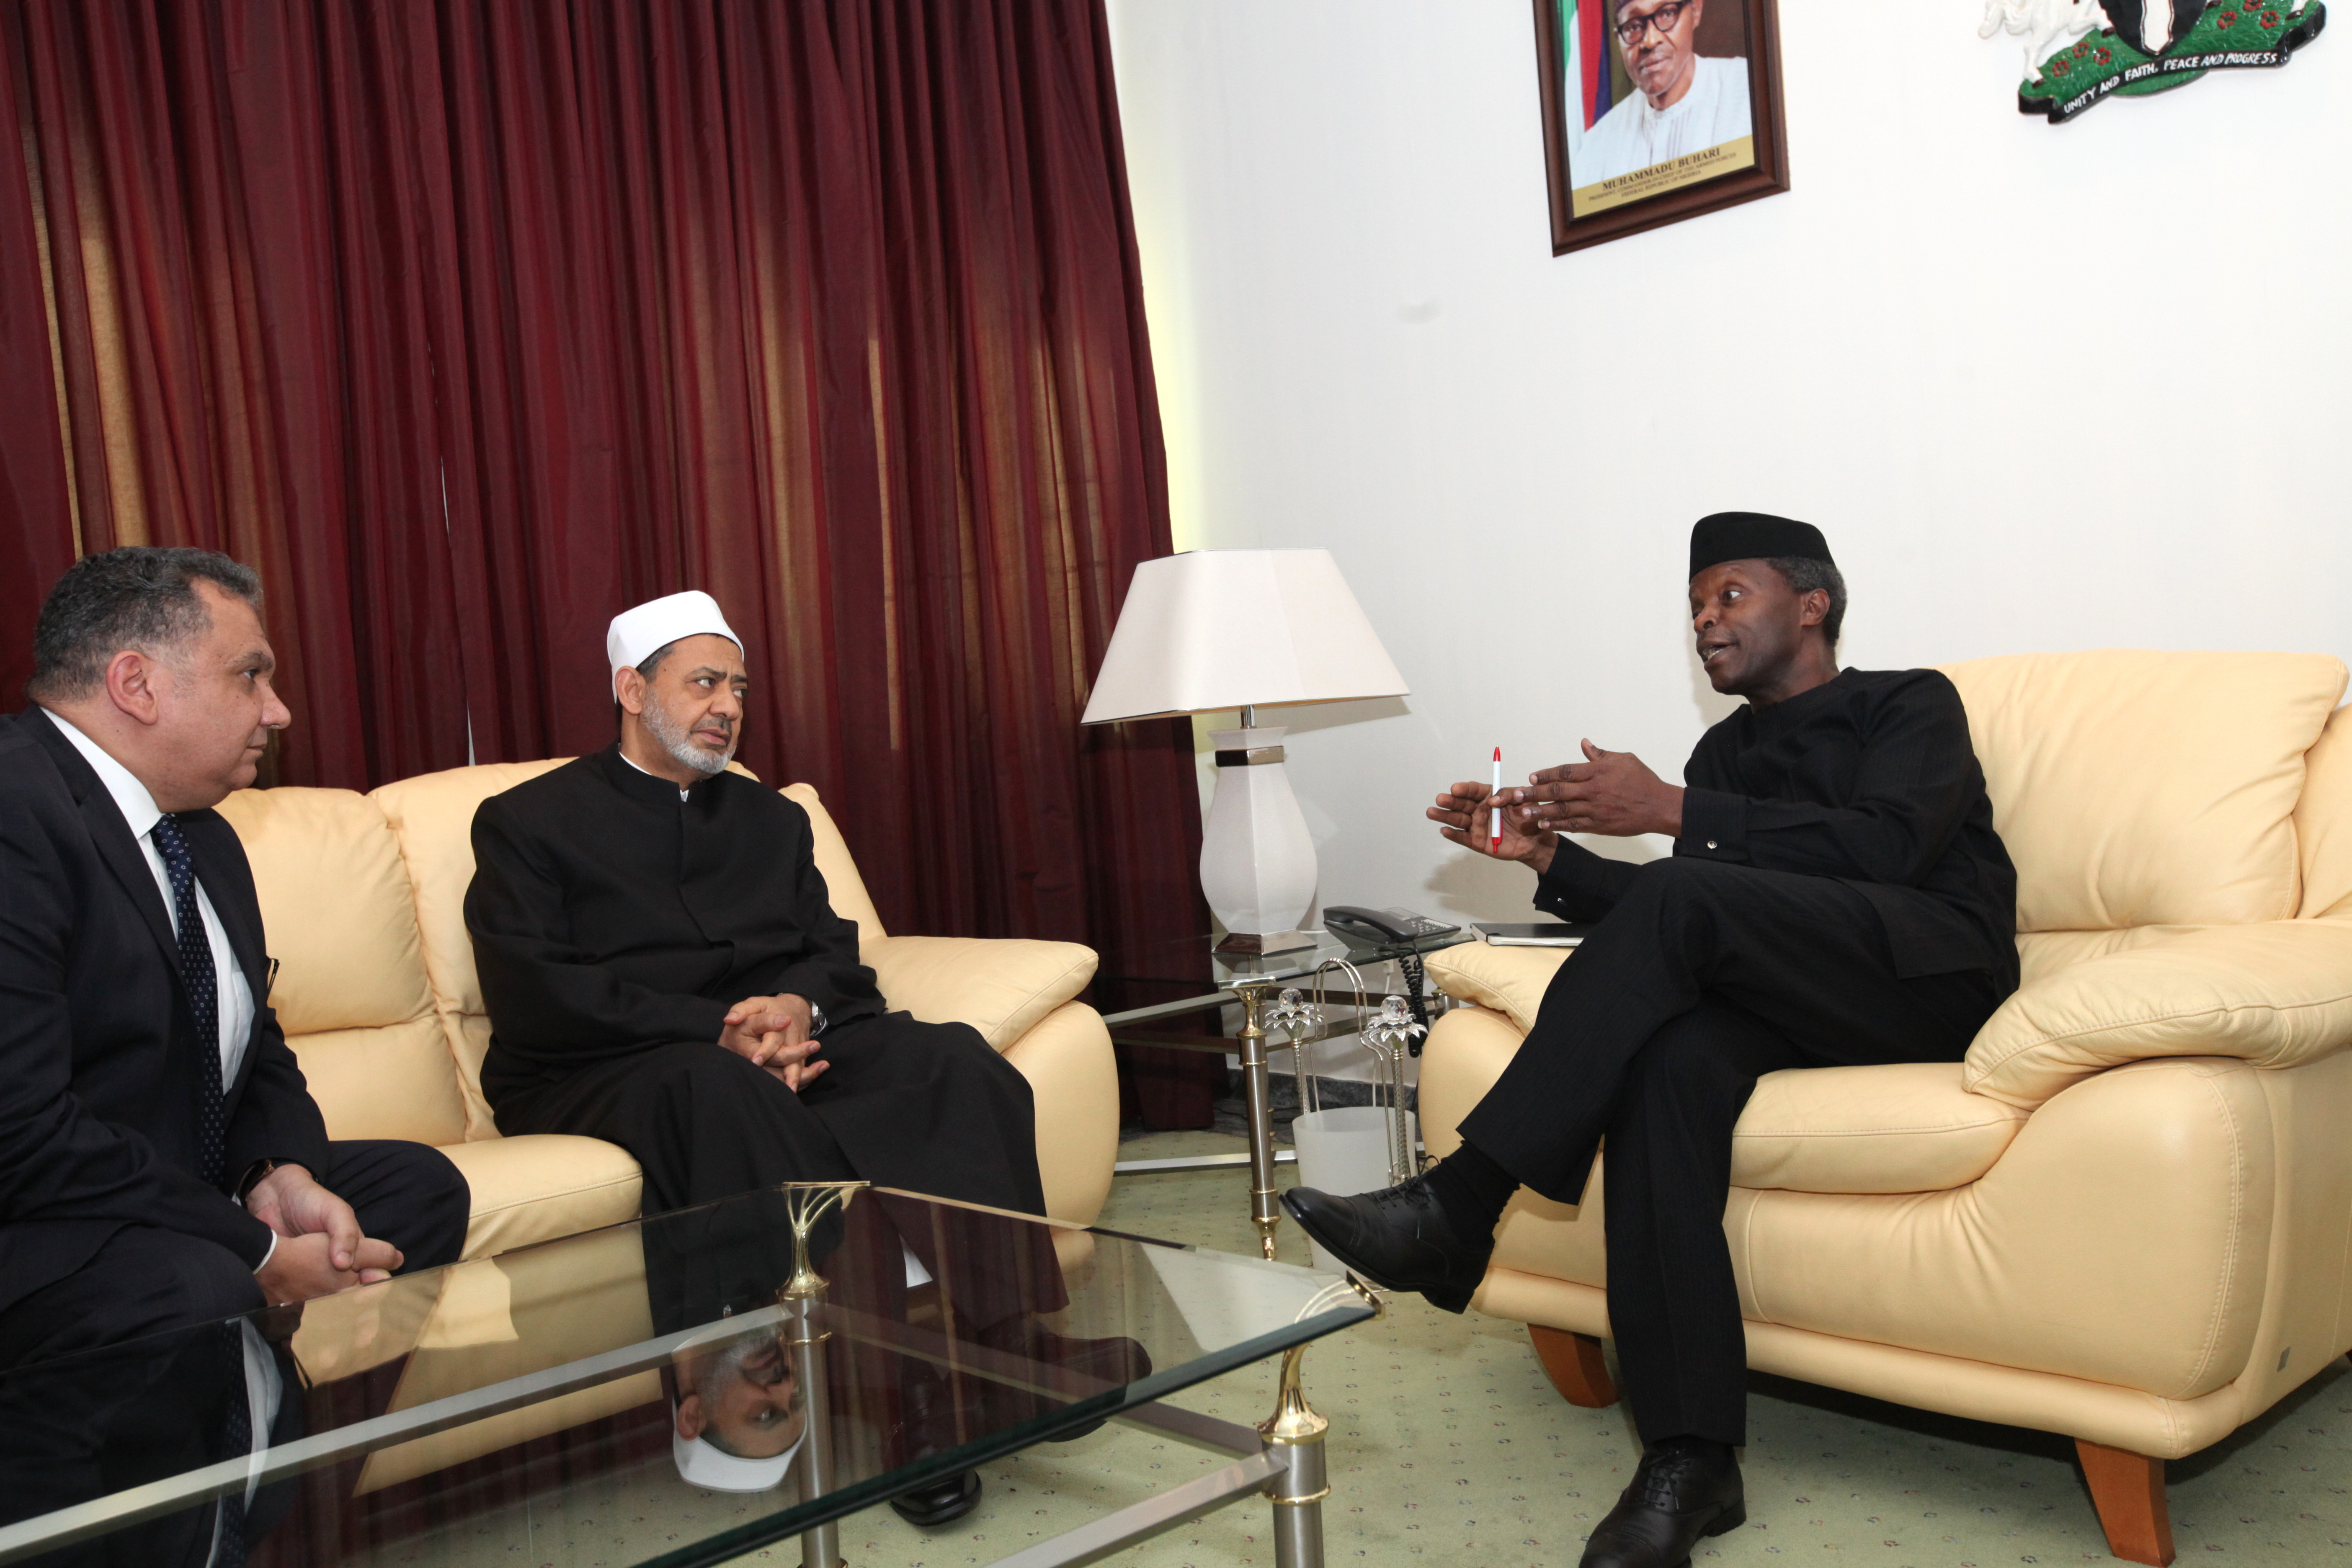 VP Osinbajo Receives His Excellency Dr Ahmed El-Tayeb, Grand Imam Sheikh Al-Azhar From The Arab Republic Of Egypt On 18/05/2016